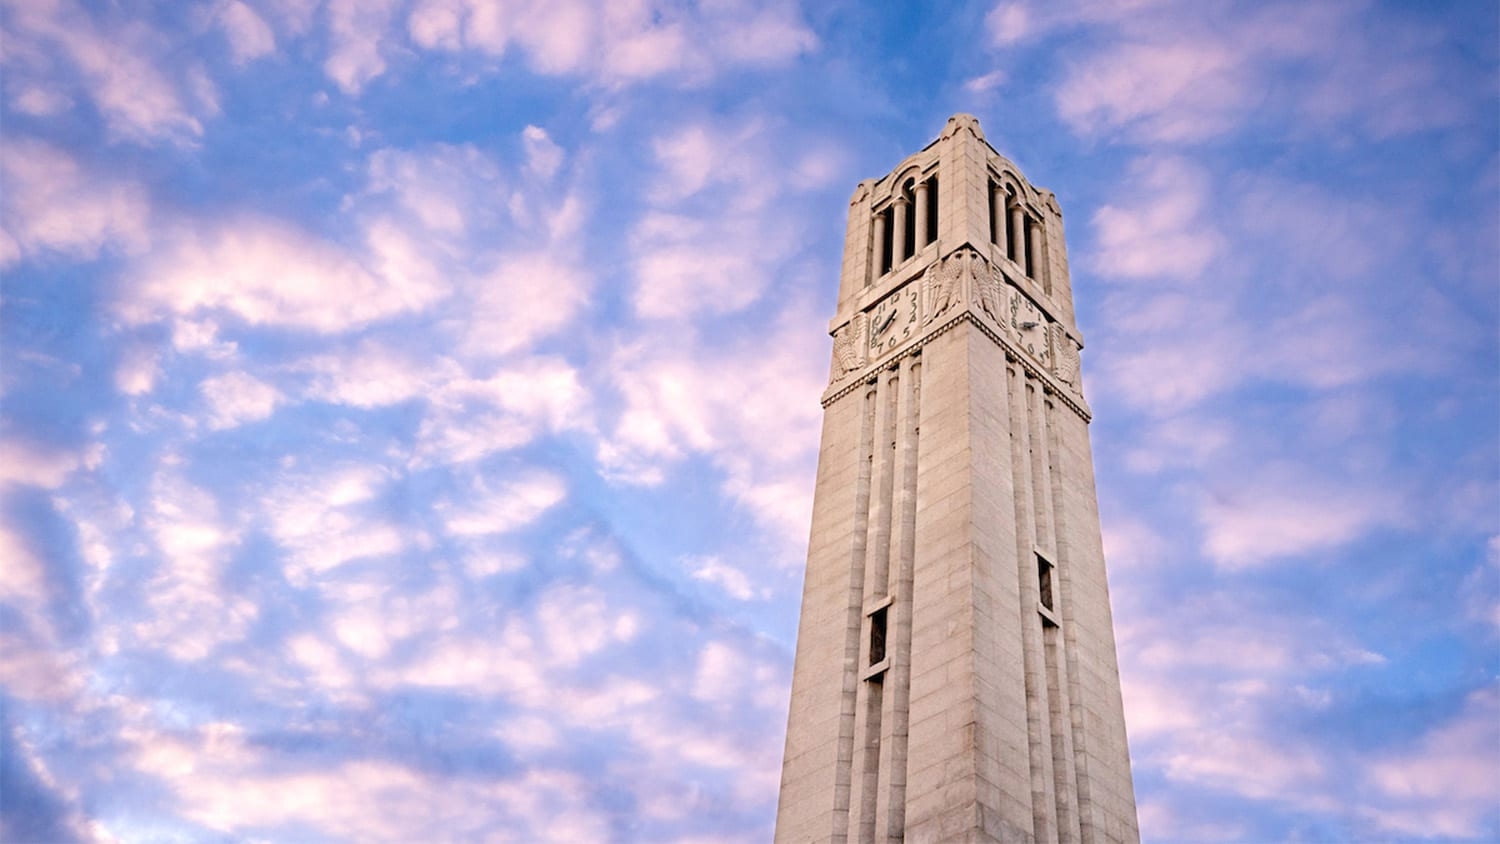 NC State's Memorial Belltower among evening clouds